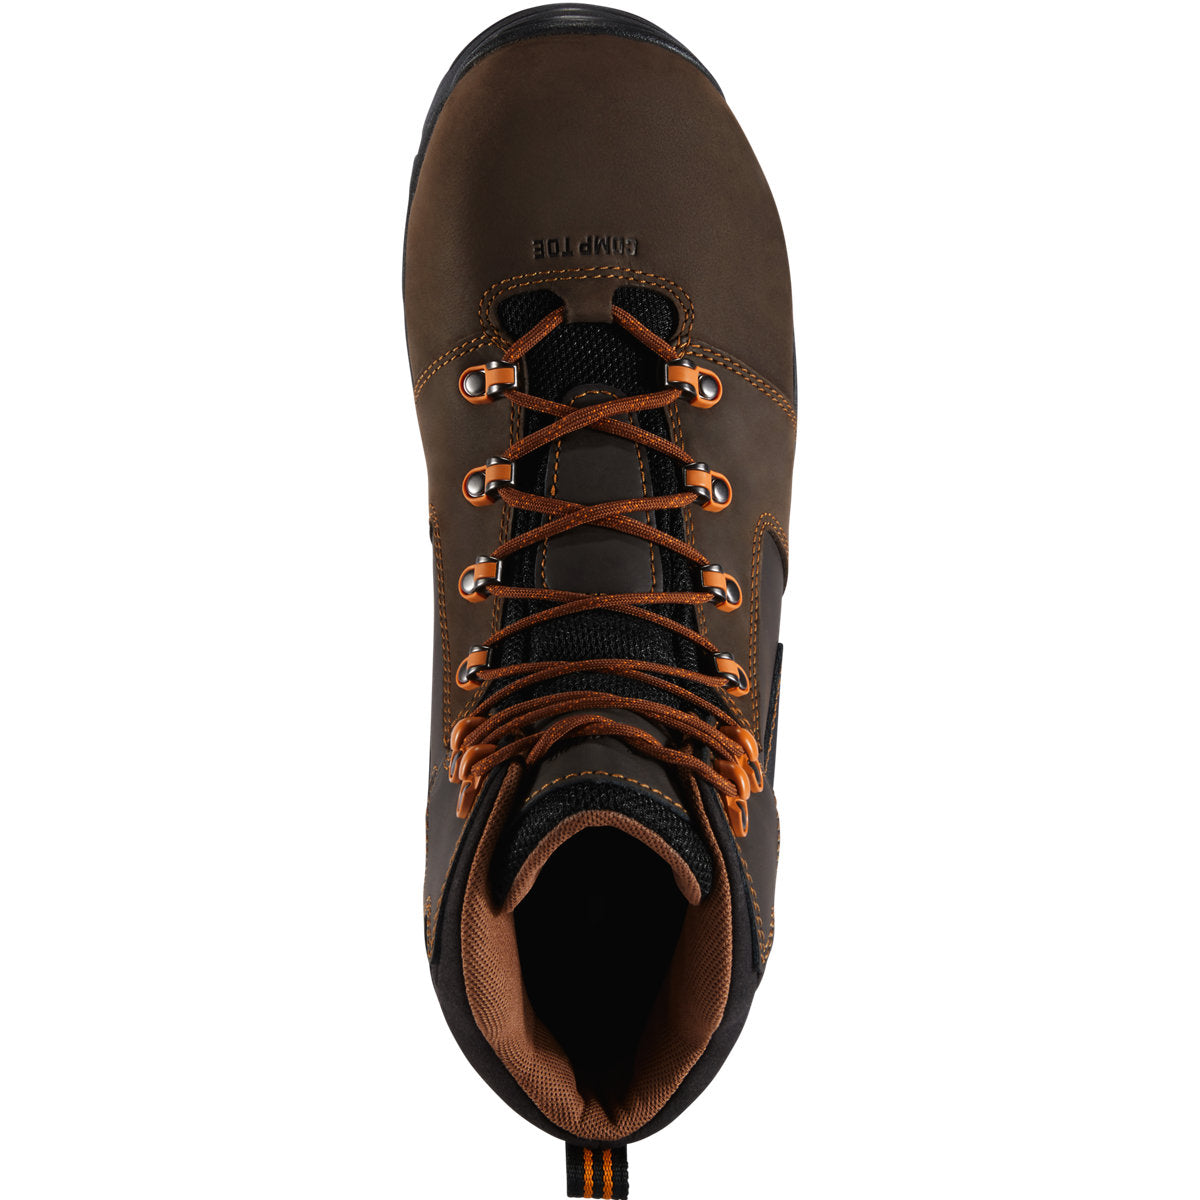 Danner Footwear Men's Vicious 4.5" Brown & Orange Hiking Boots 13858